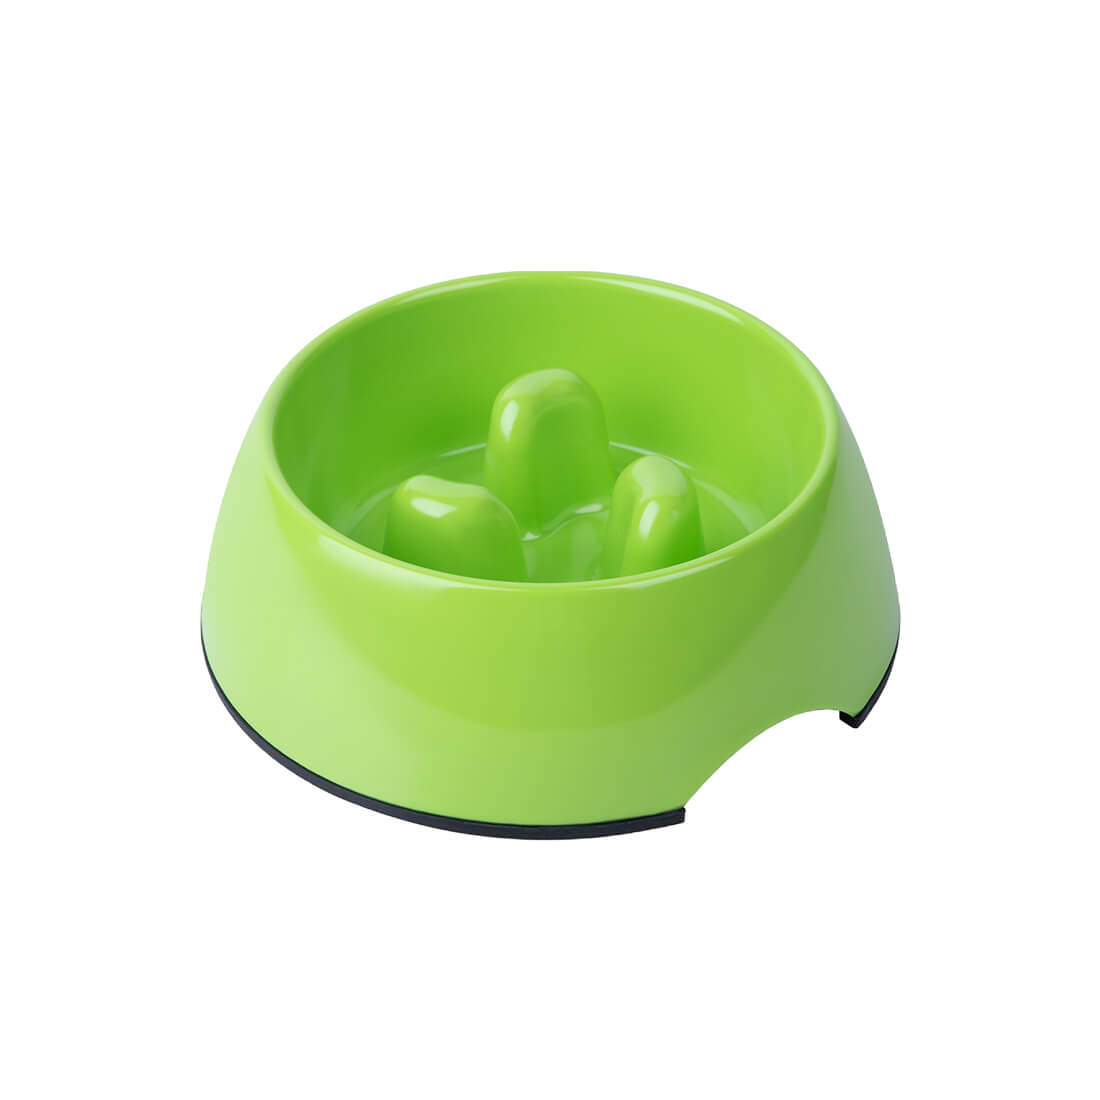 DPOEGTS Slow Feeder Dog Bowl, Puzzle Dog Food Bowl Anti-Gulping Interactive Dog  Bowl and Water